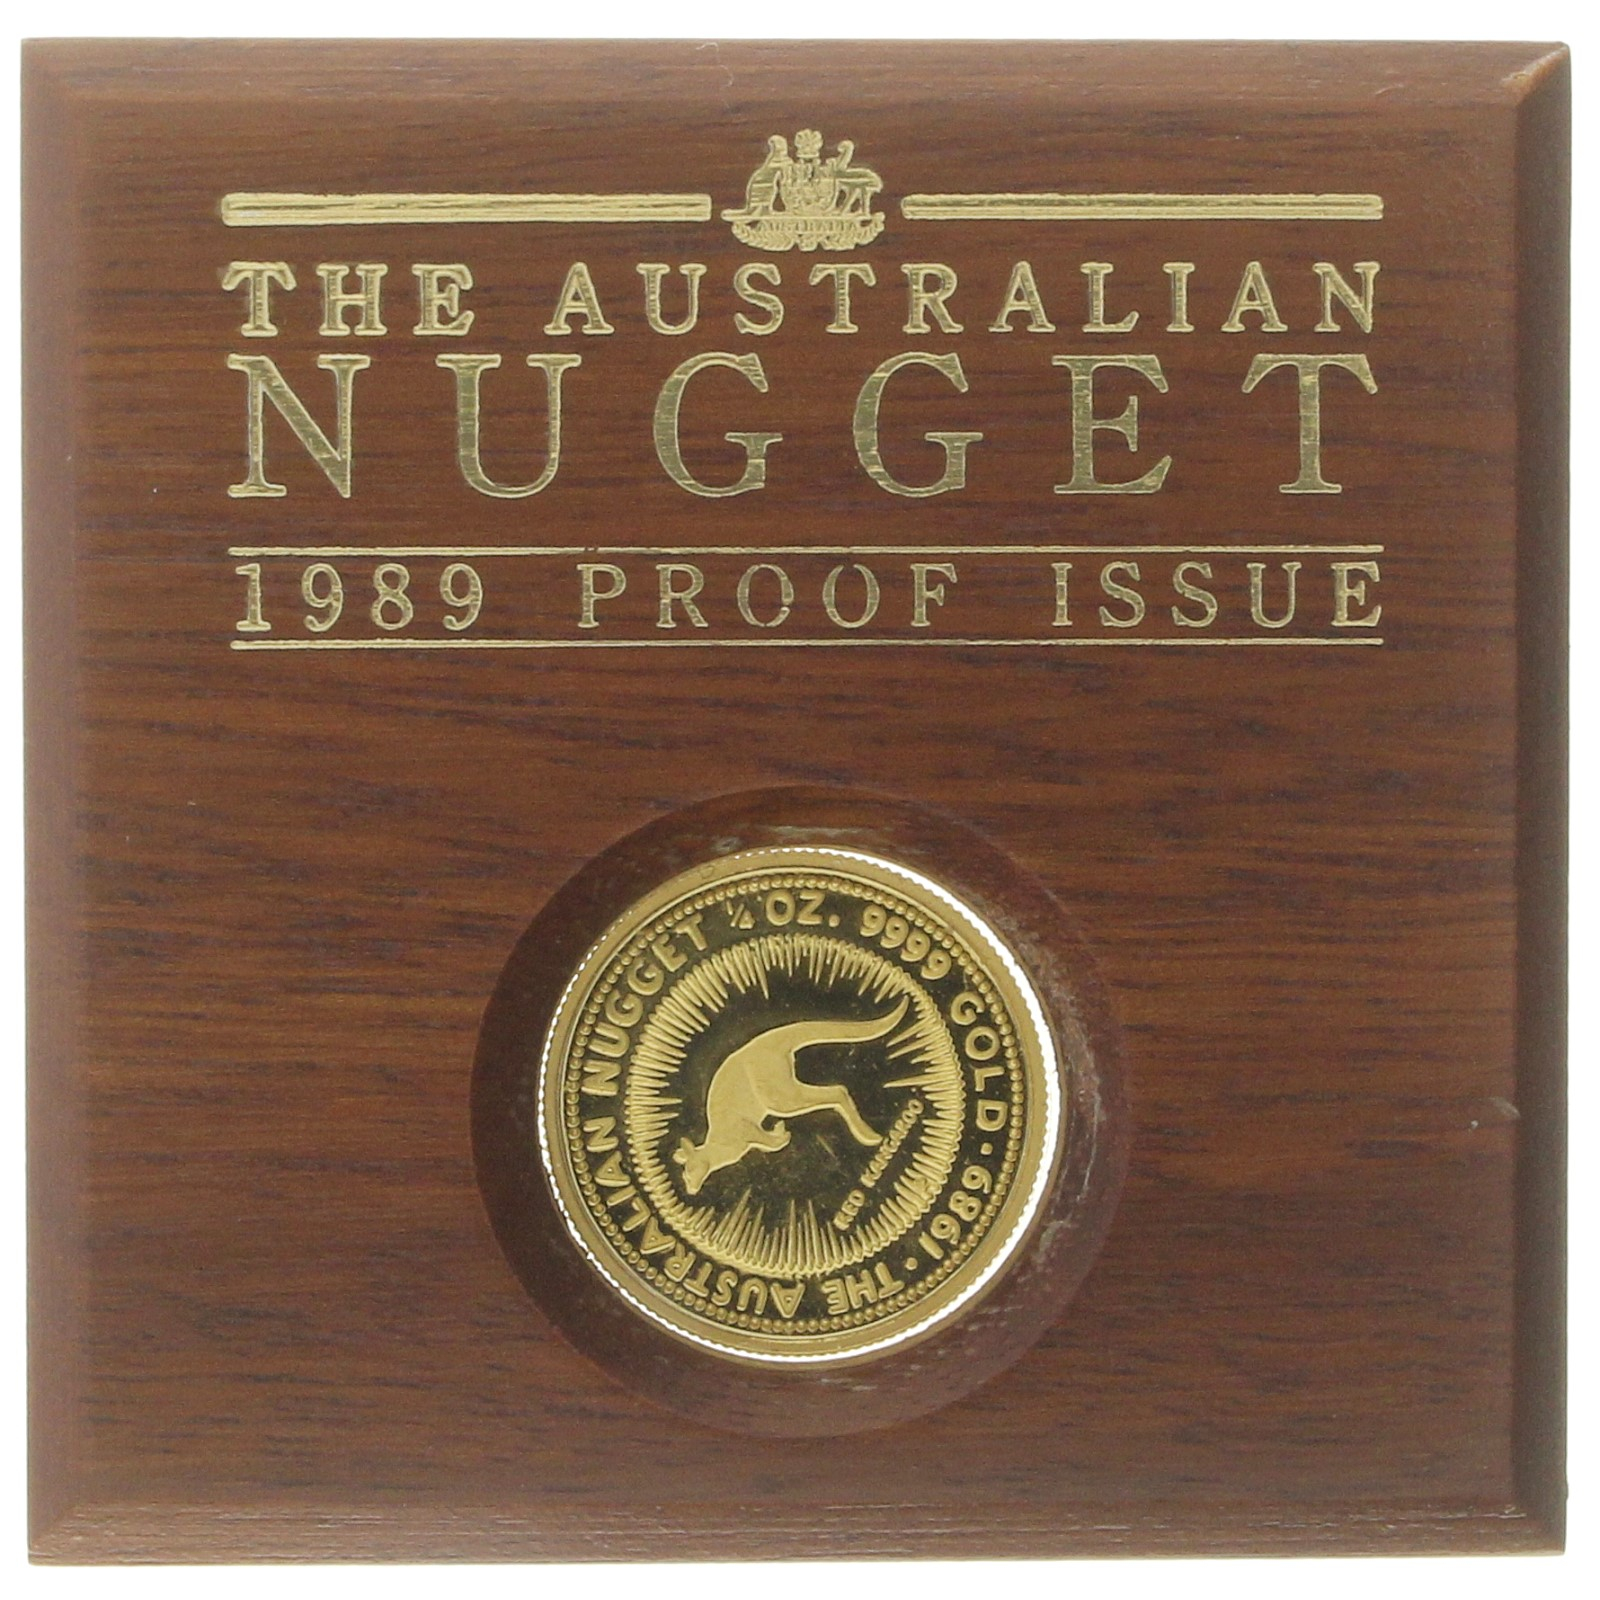 Australia - 25 Dollars - 1989 - Elizabeth II - Australian Nugget - 1/4oz